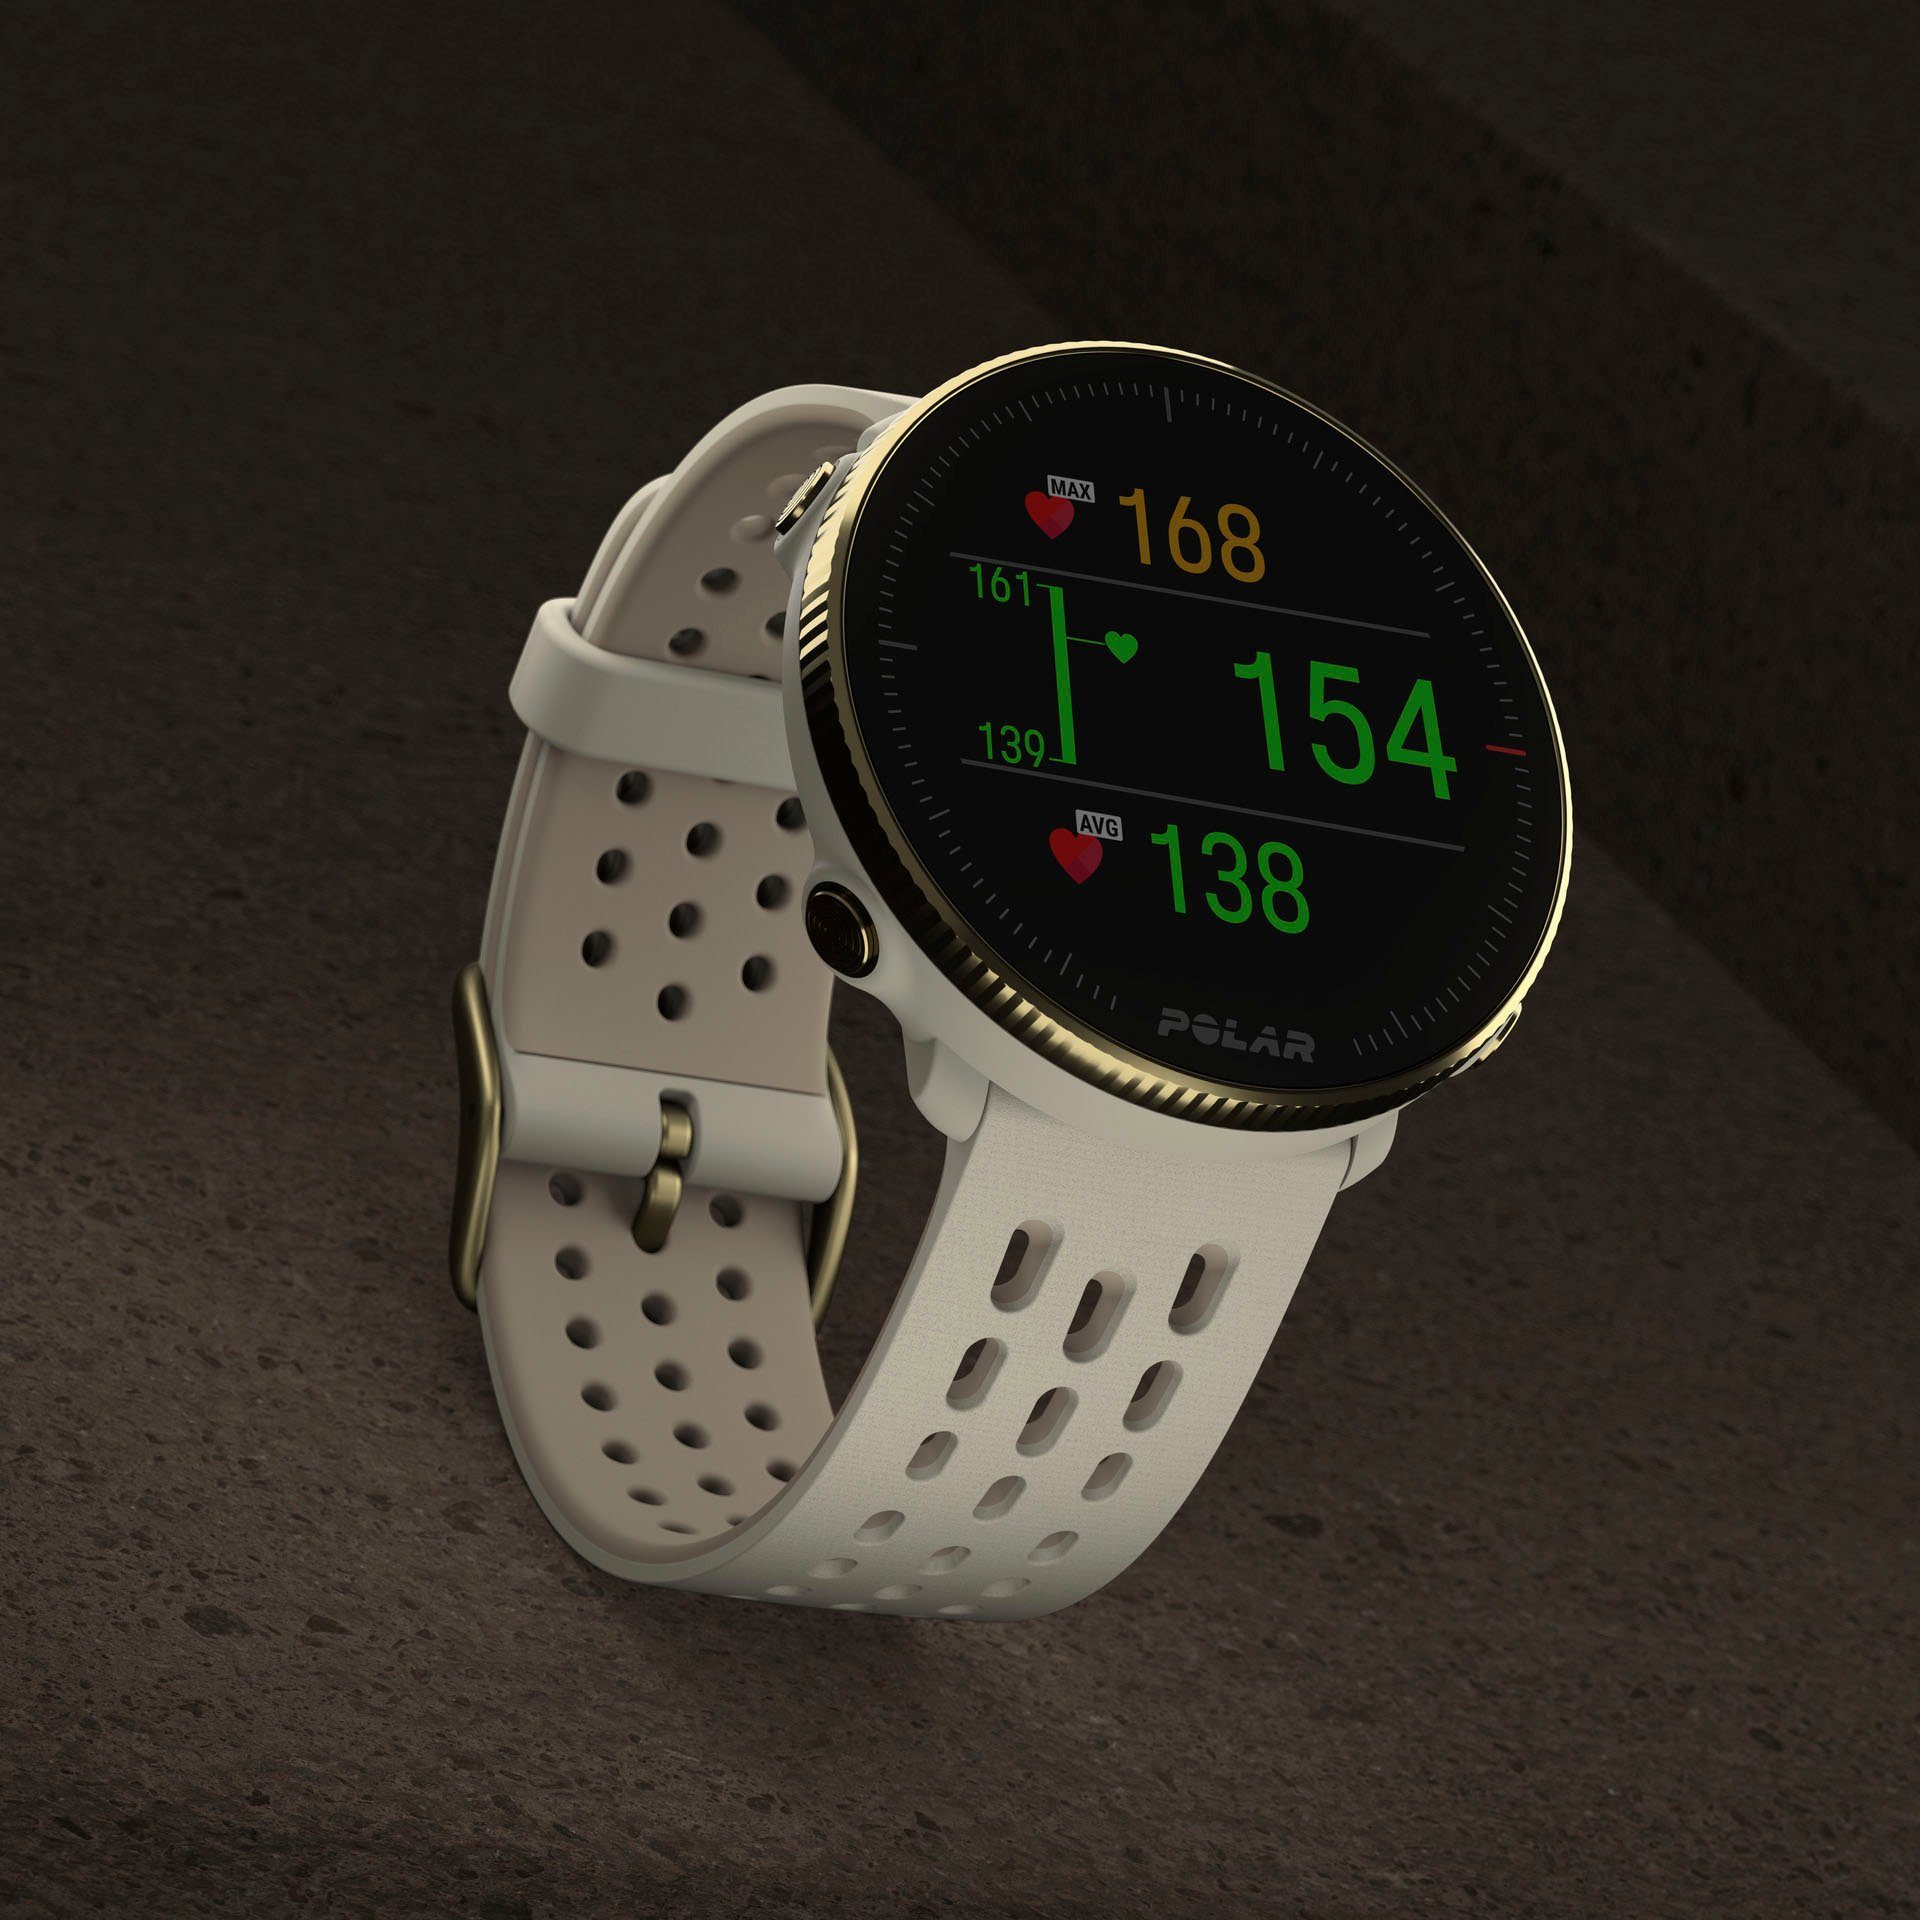 Polar Vantage GPS-Multisportuhr, Größe Smartwatch Gold-Champagner S-L M2